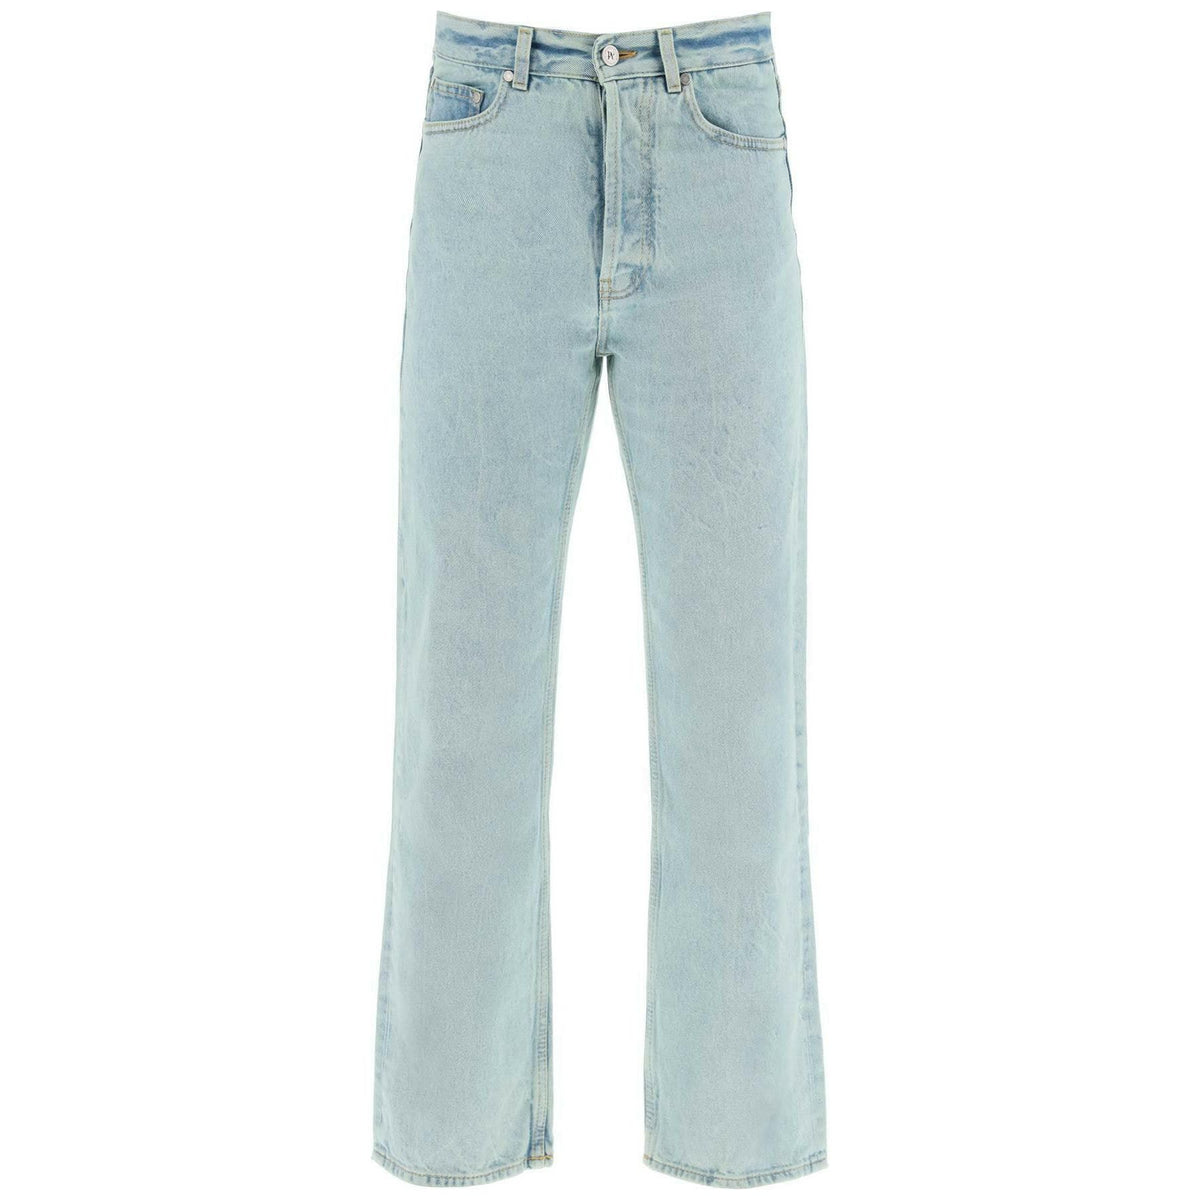 Mint Off-White Denim Garment-Dyed Cotton Jeans PALM ANGELS JOHN JULIA.